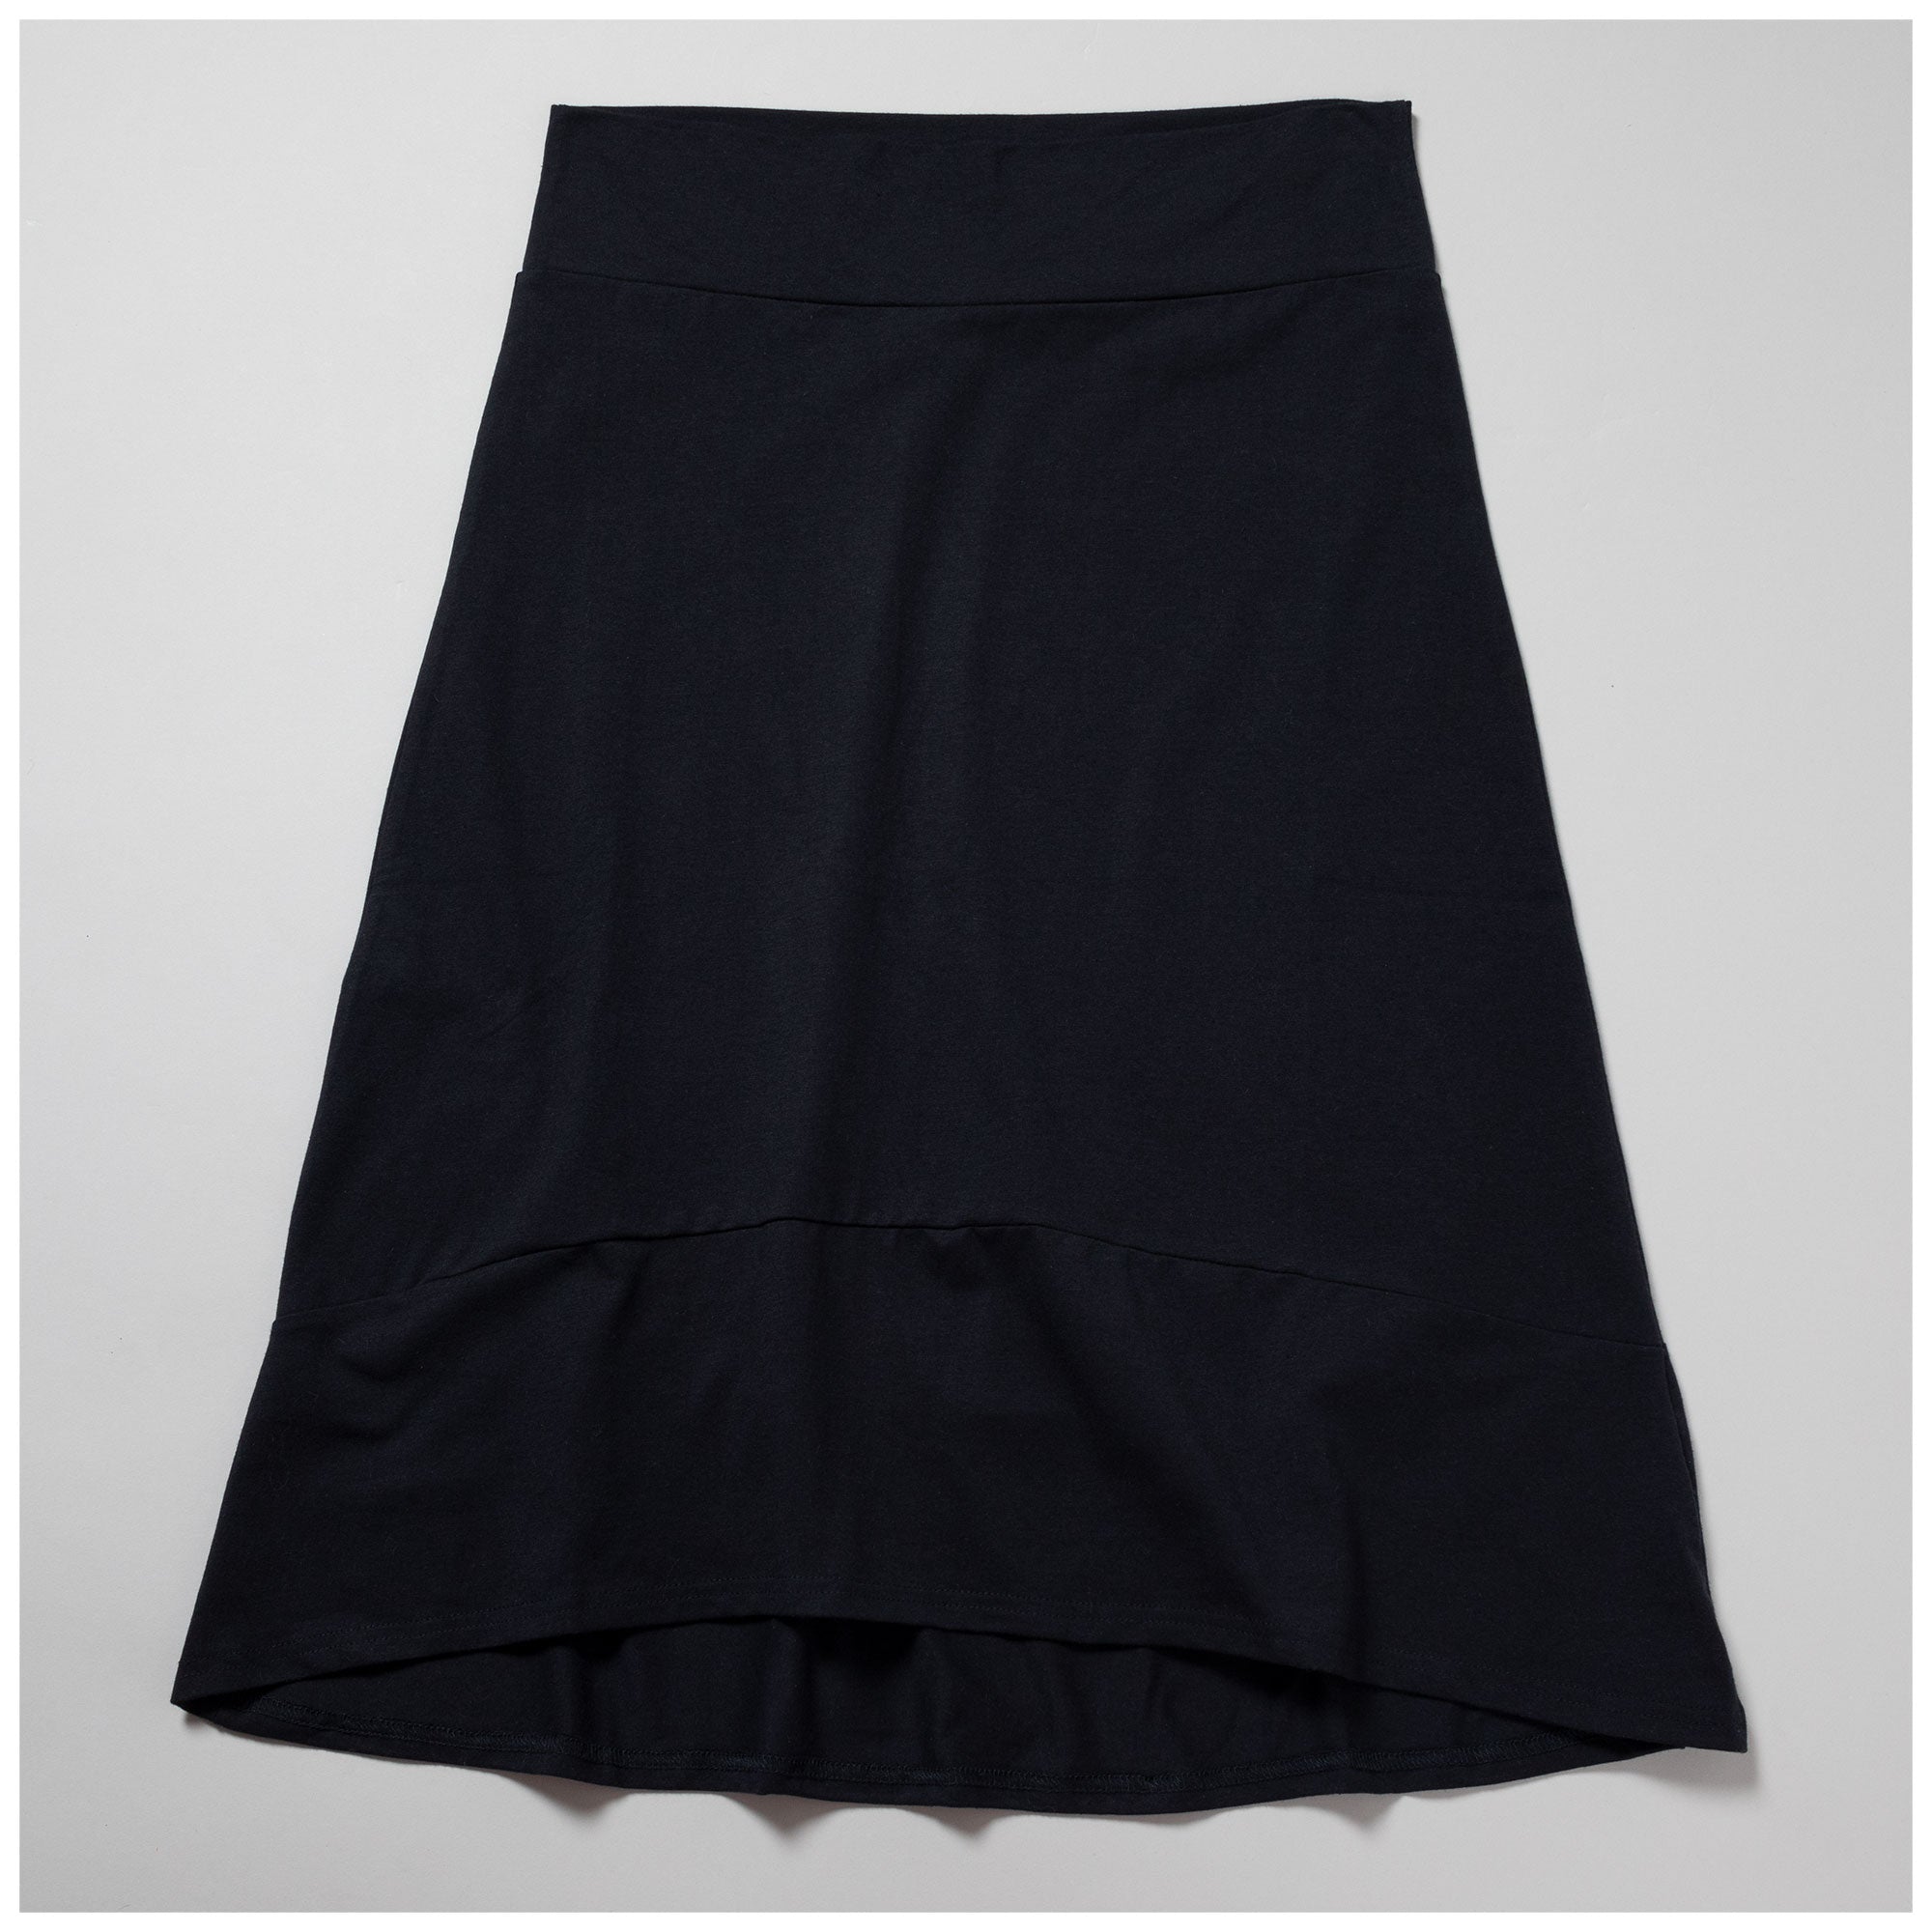 Organic High Low Skirt - Brown - S